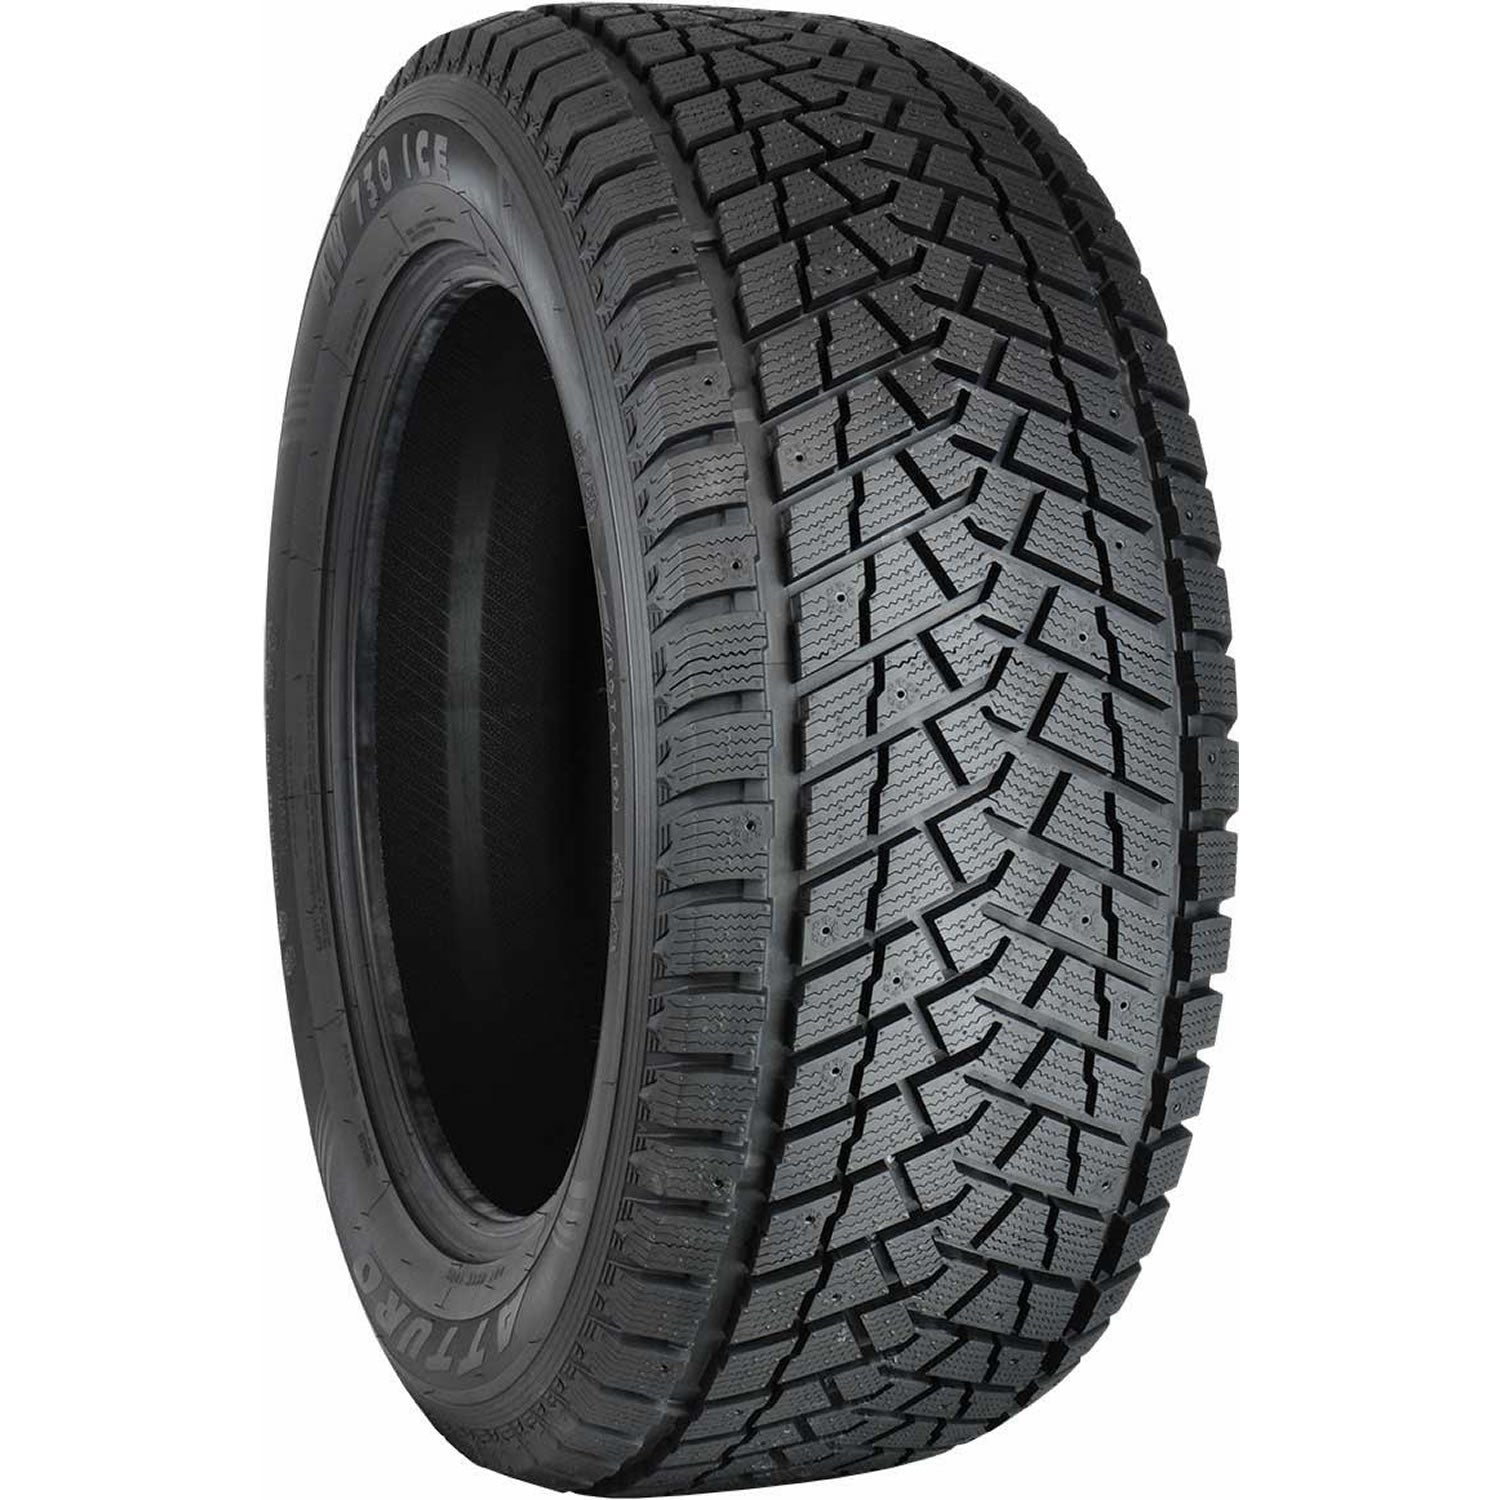 ATTURO AW730 ICE 285/40R20 (29X11.4R 20) Tires